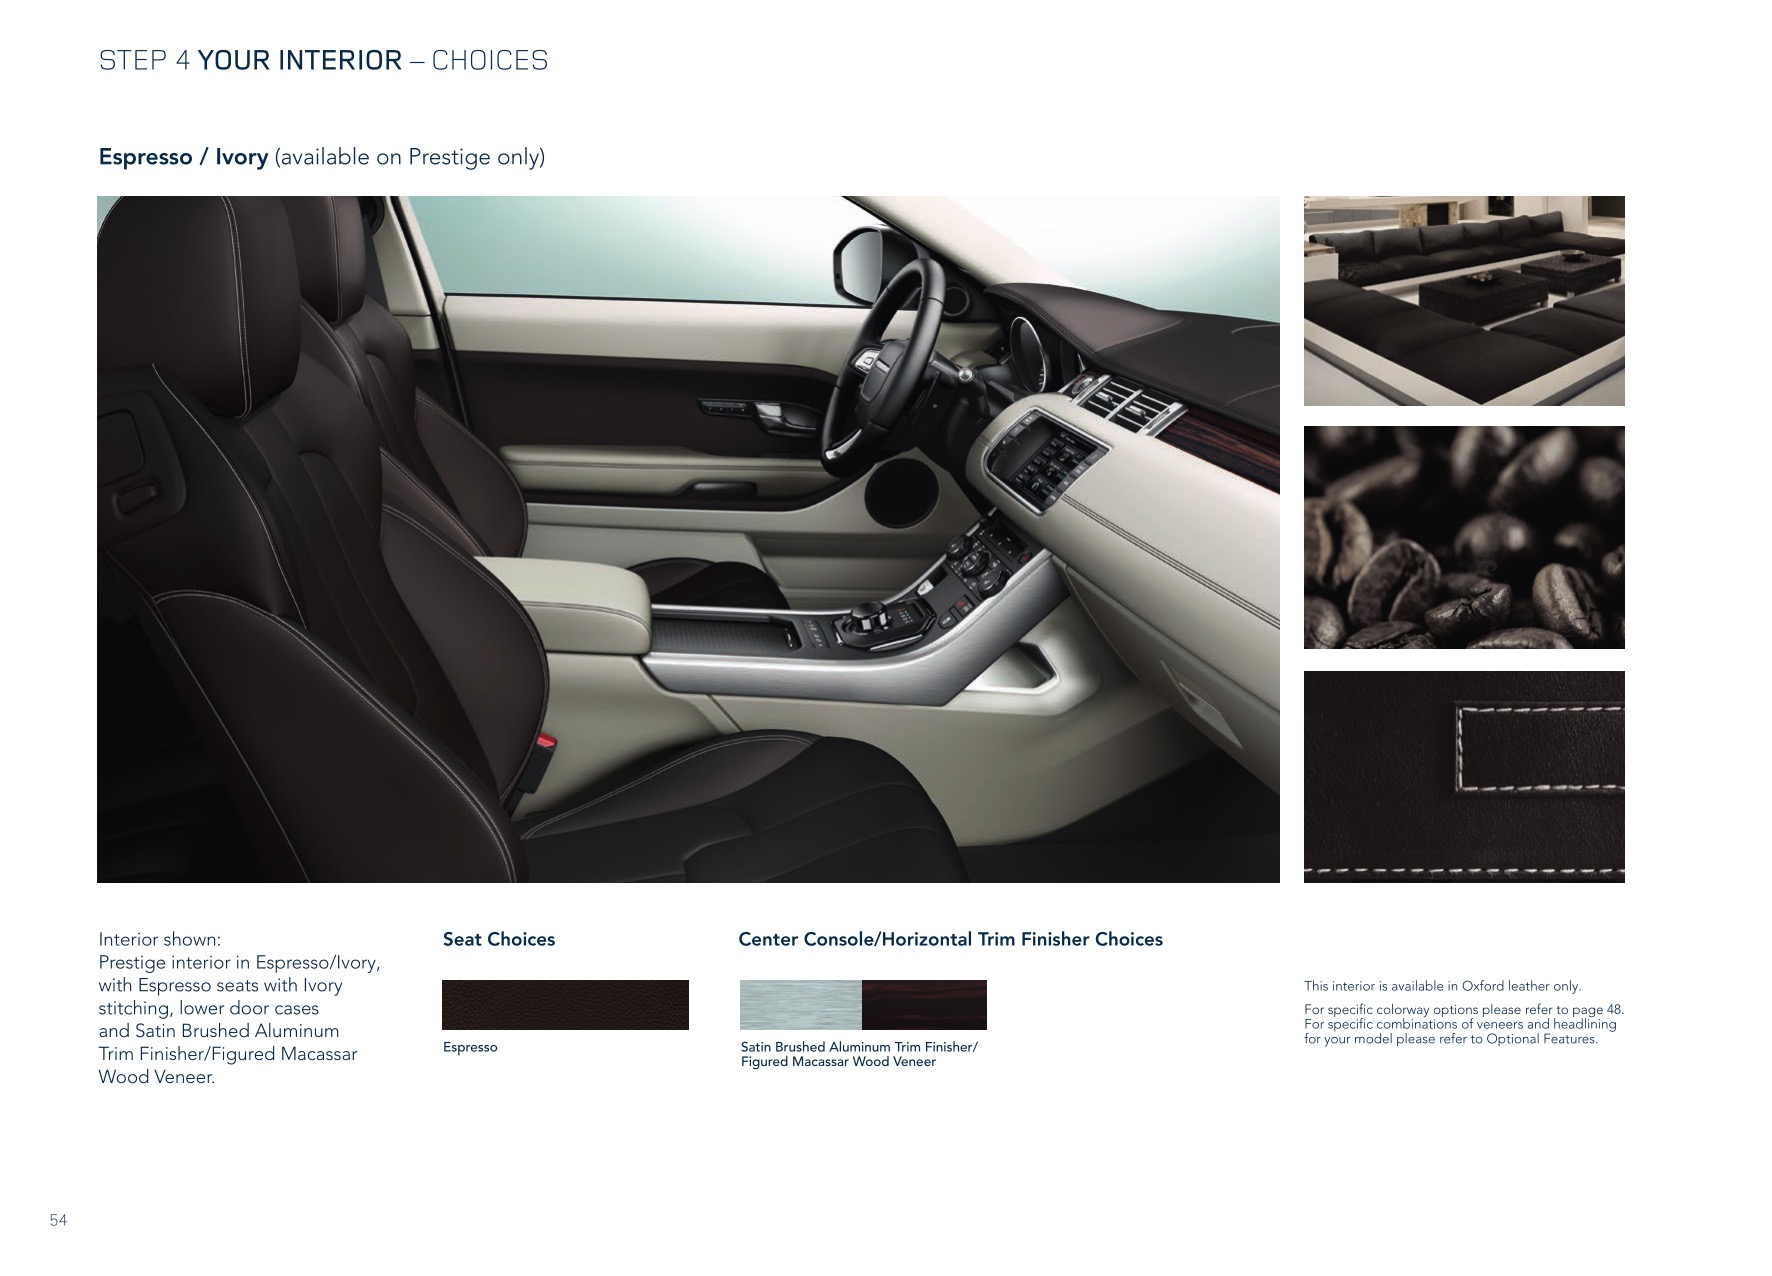 2014 Land Rover Evoque Brochure Page 54